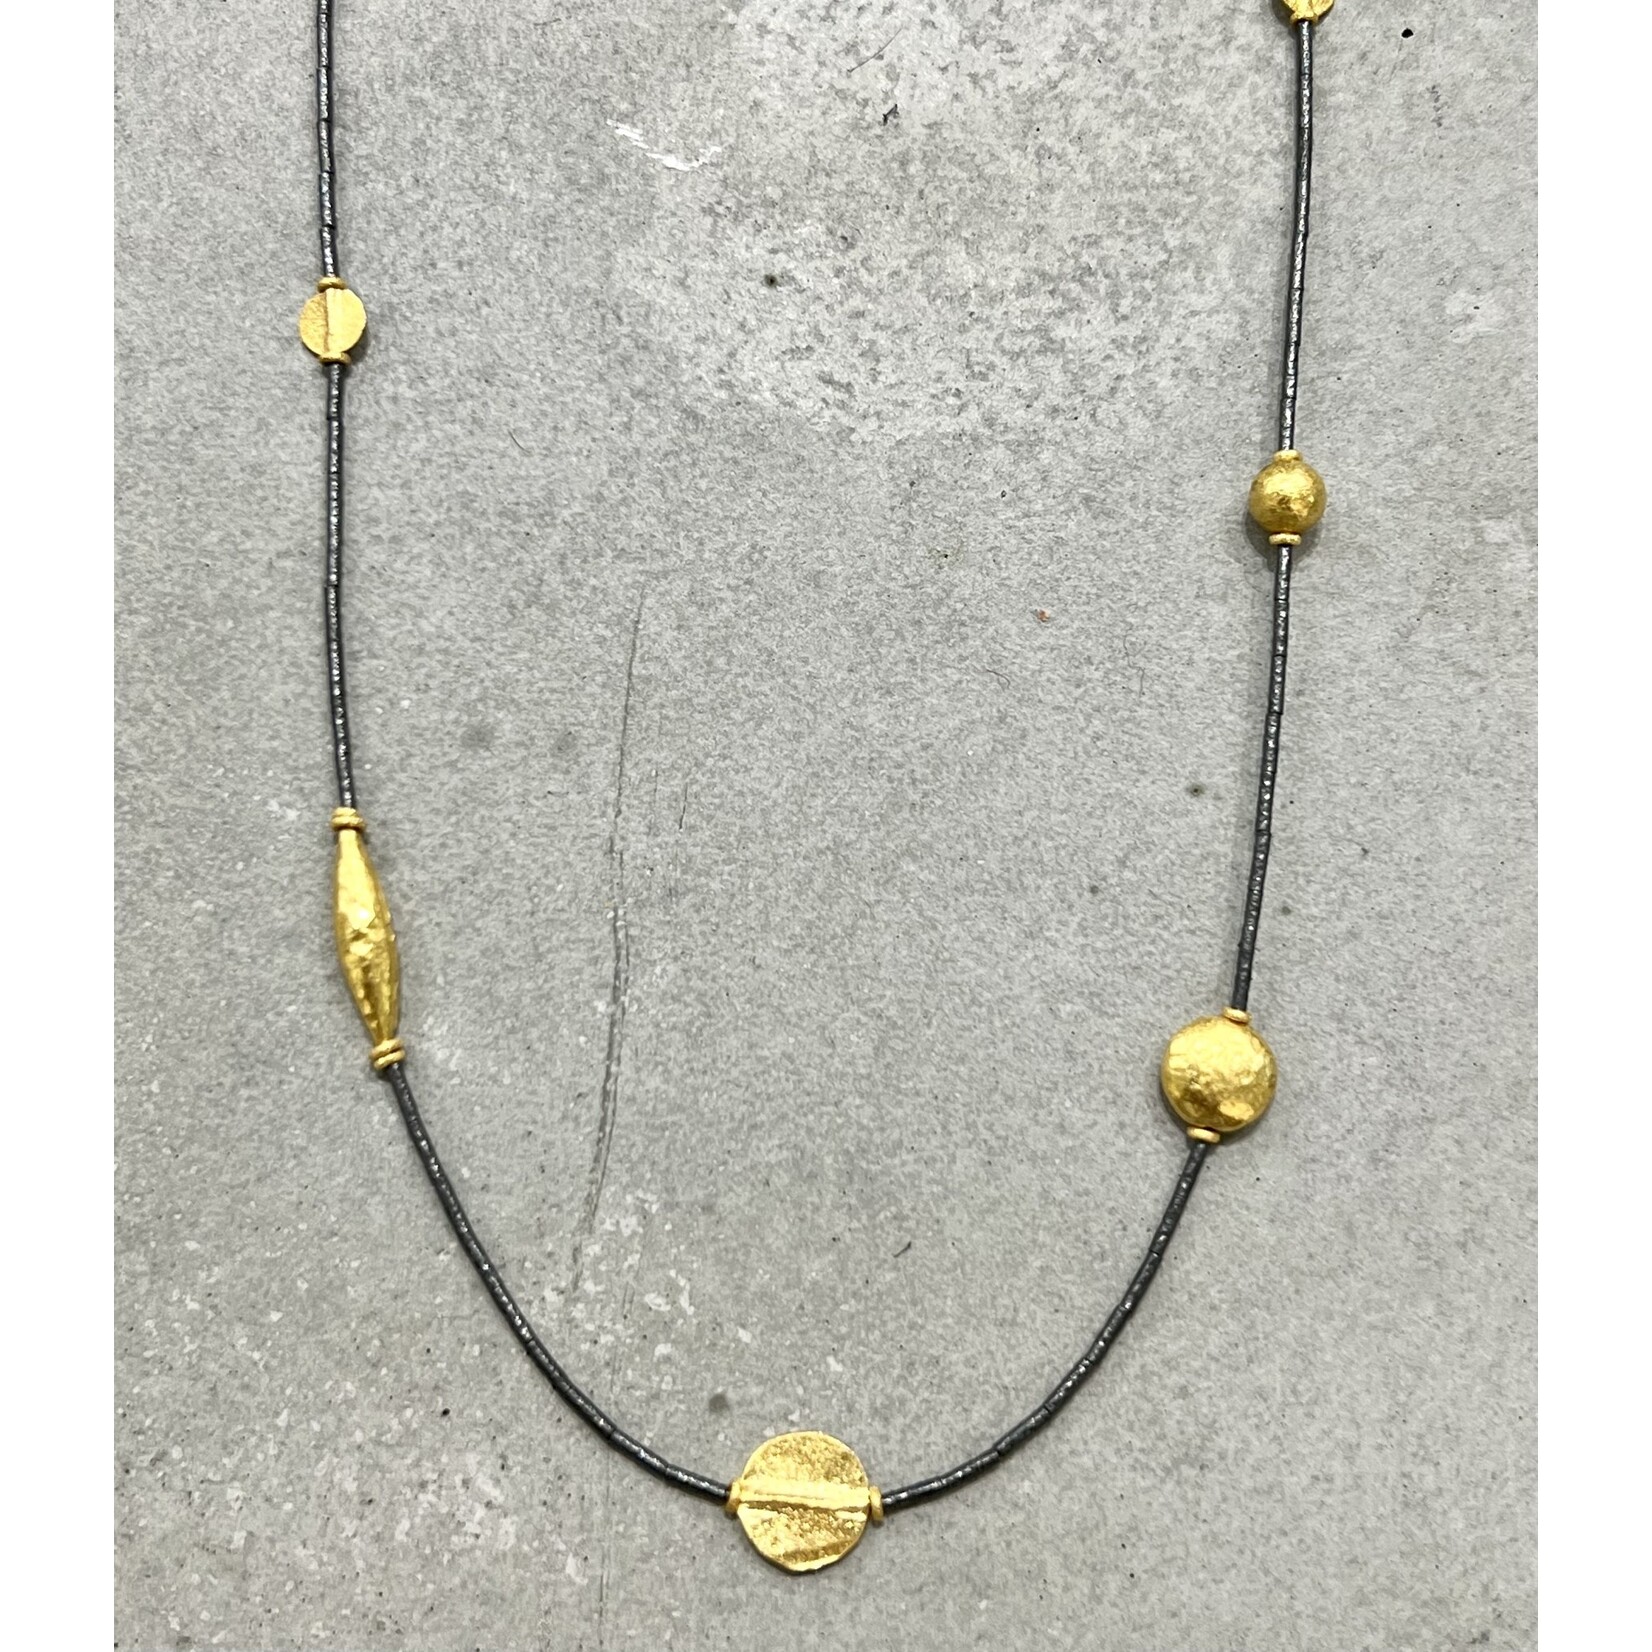 ARA Collection 24k Gold & Oxidized Silver Mixed Bead Necklace